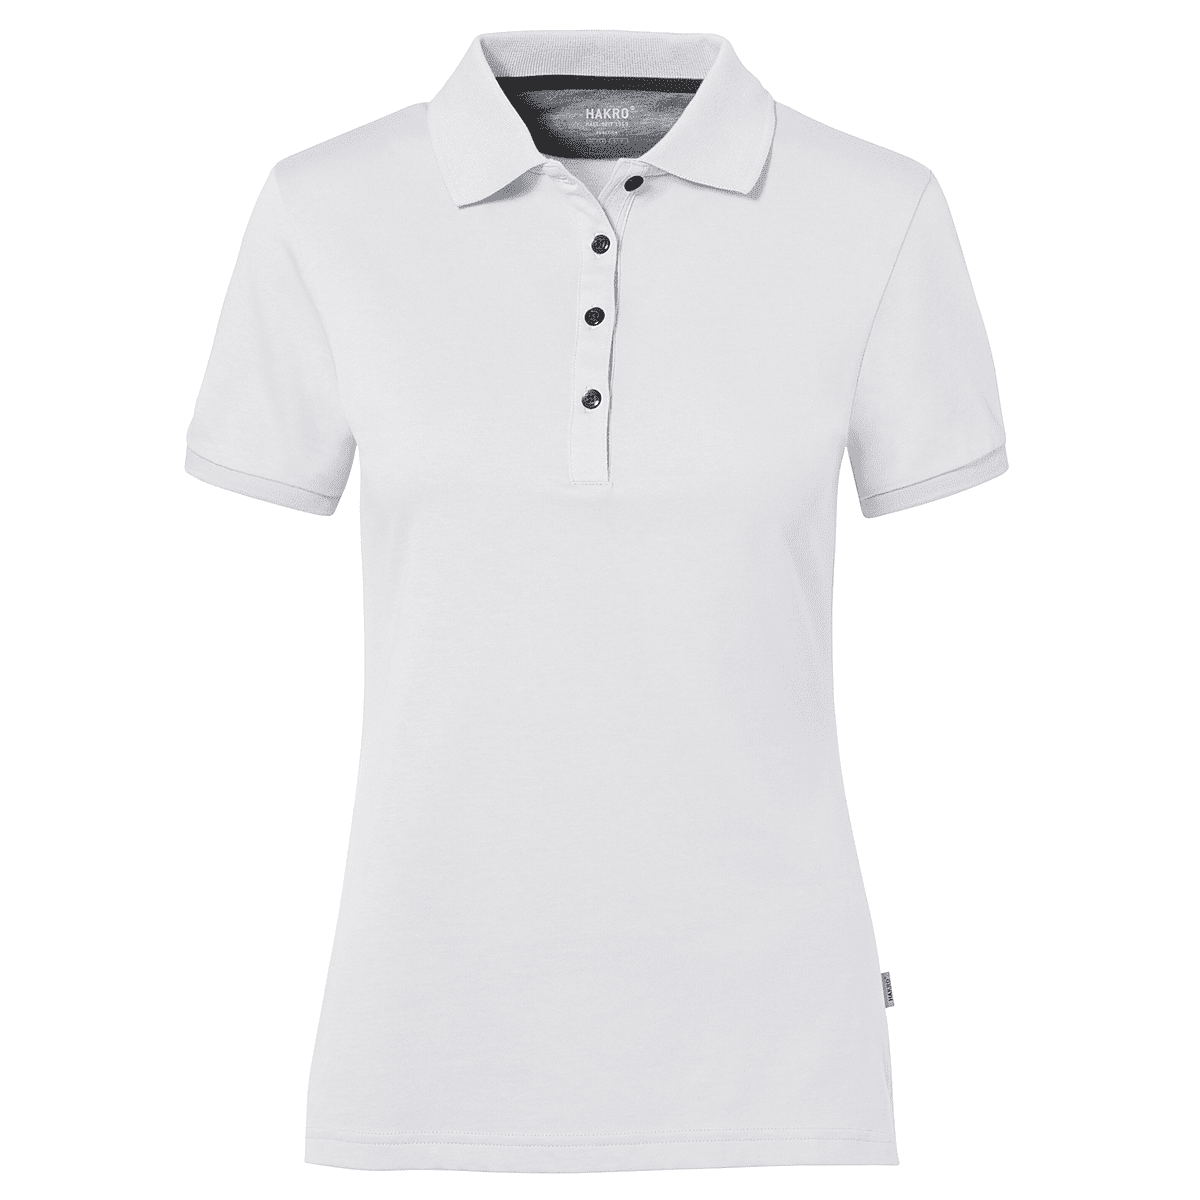 Damen Polo-Shirt Funktion weiß